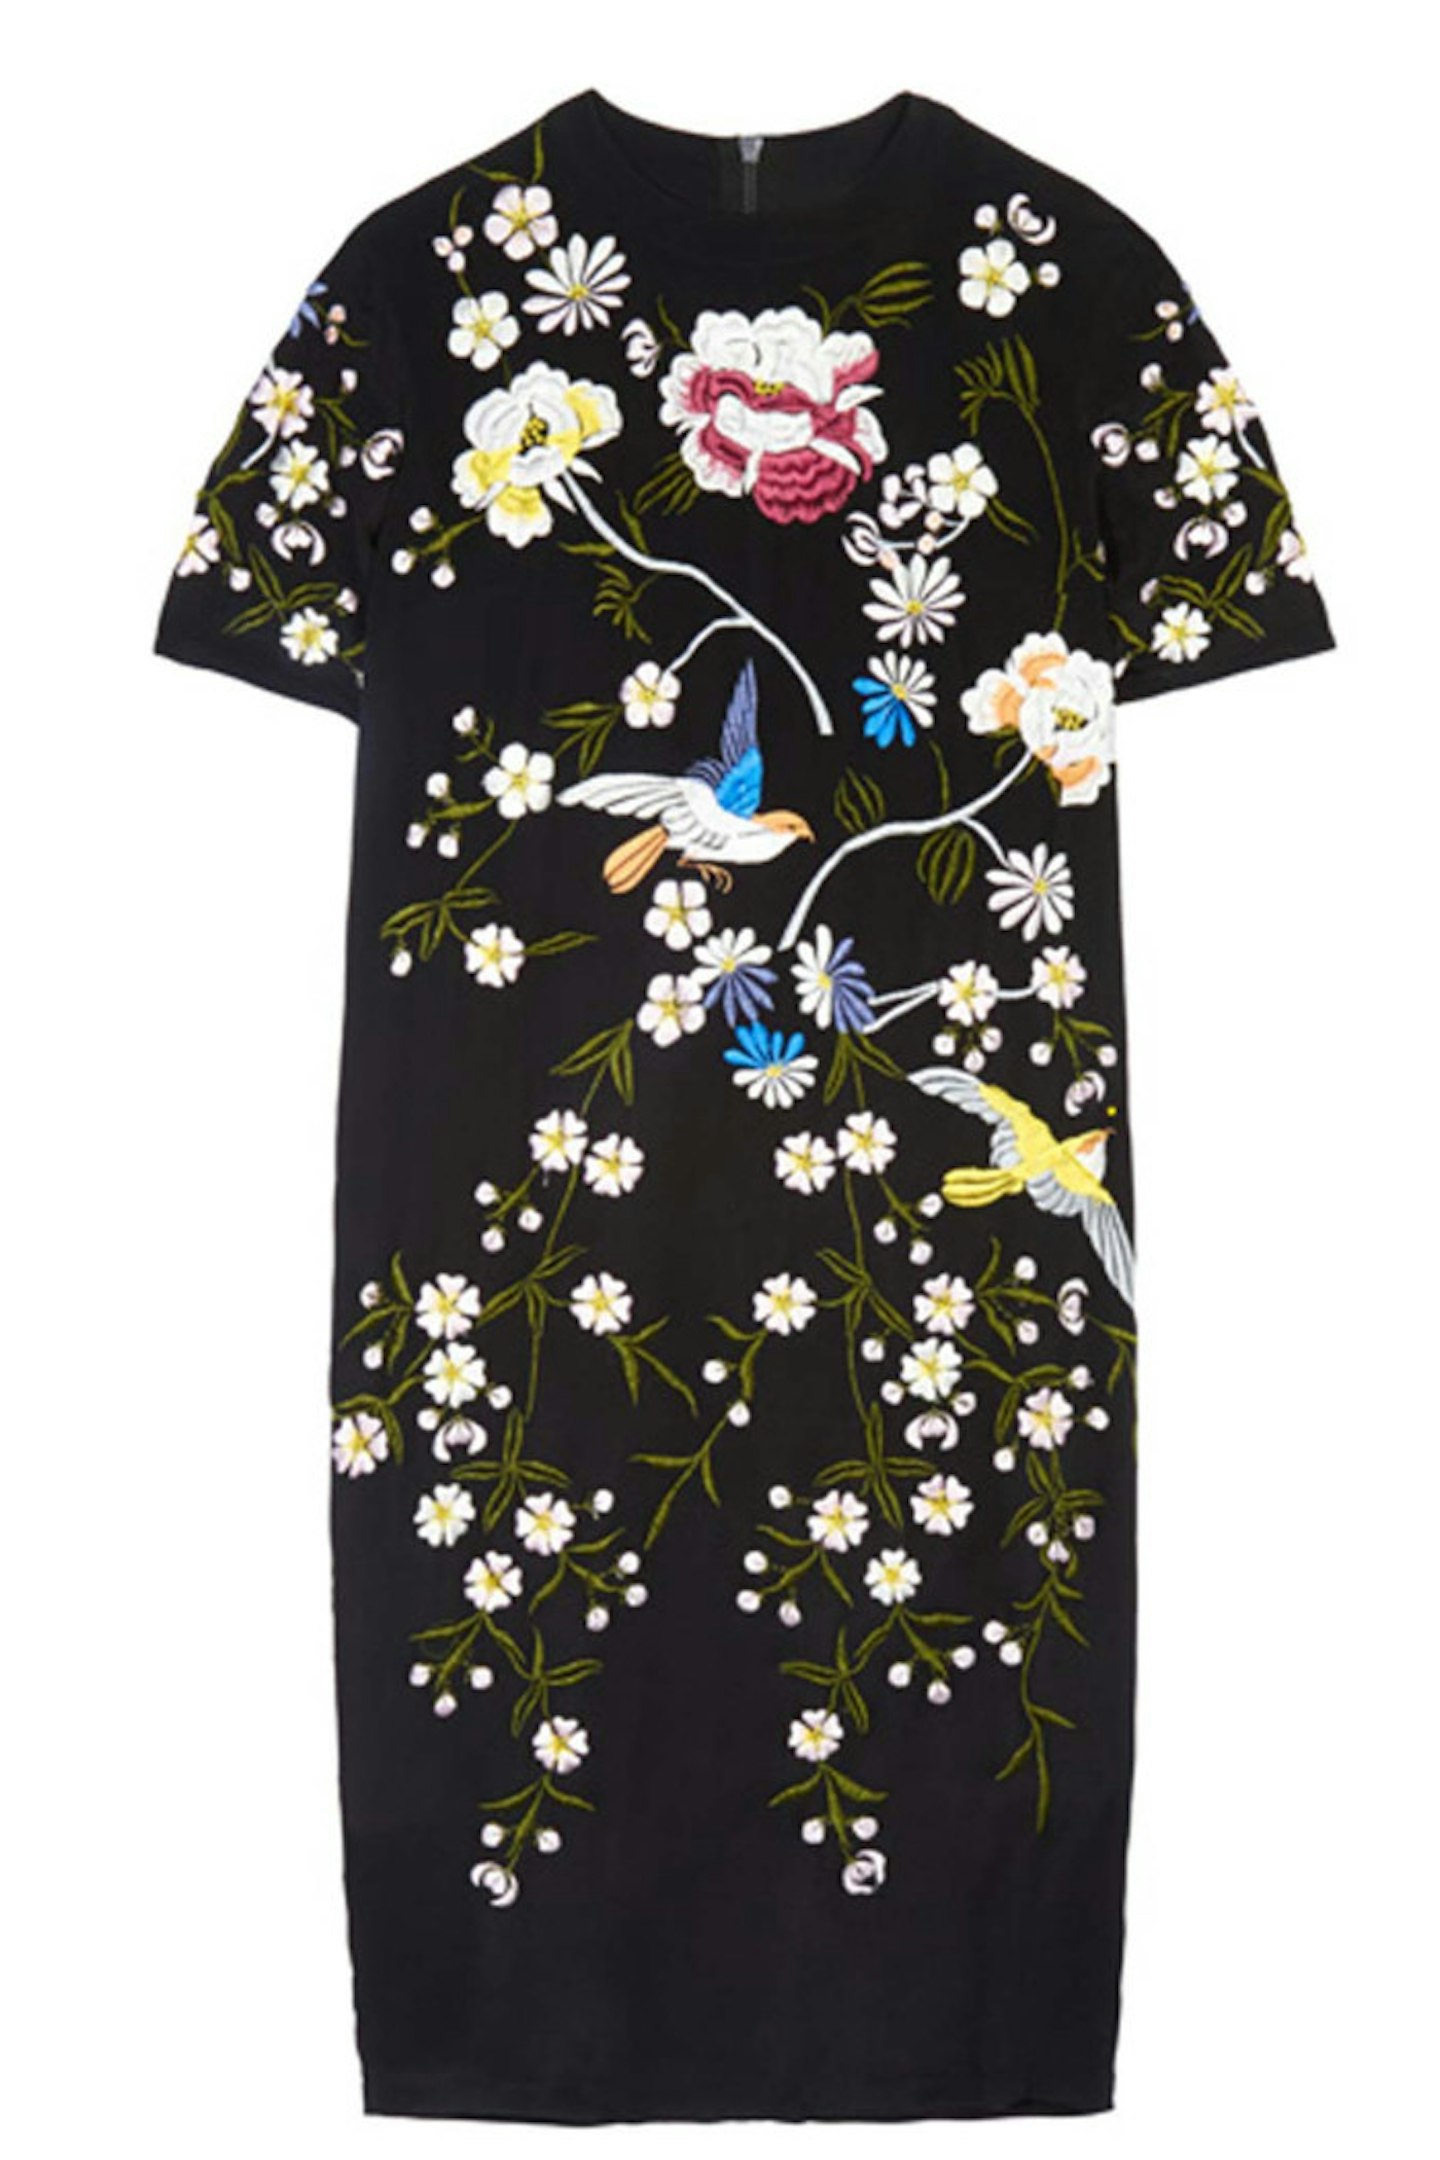 38. Floral Print Dress, £65, ASOS.com